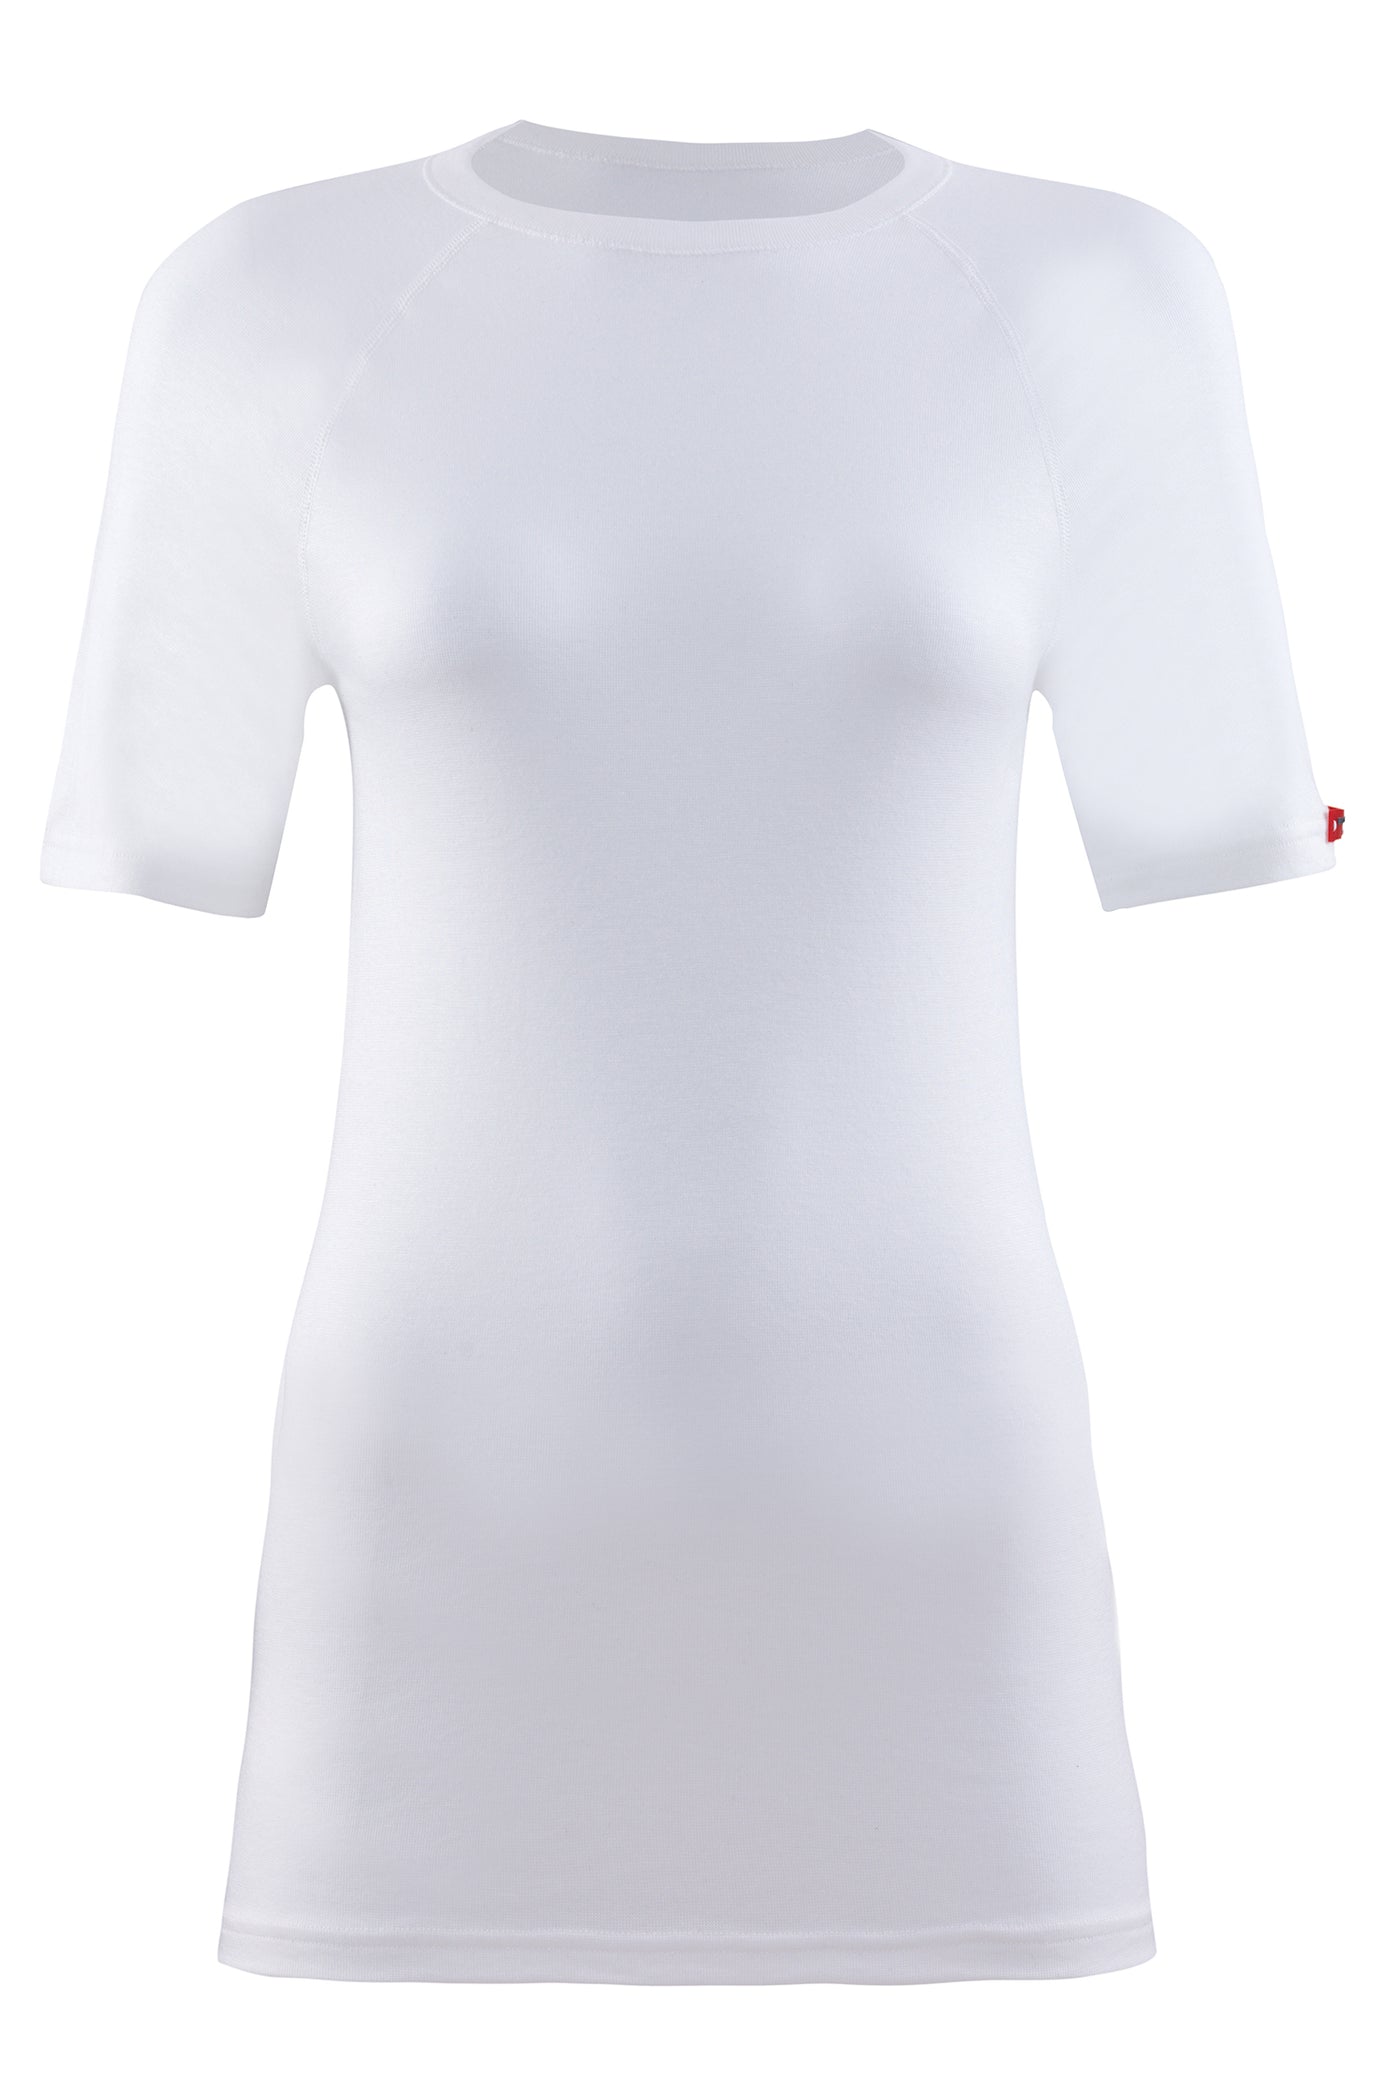 blackspade-Ladies' thermal t-shirt-9258, level-2-underwear-white